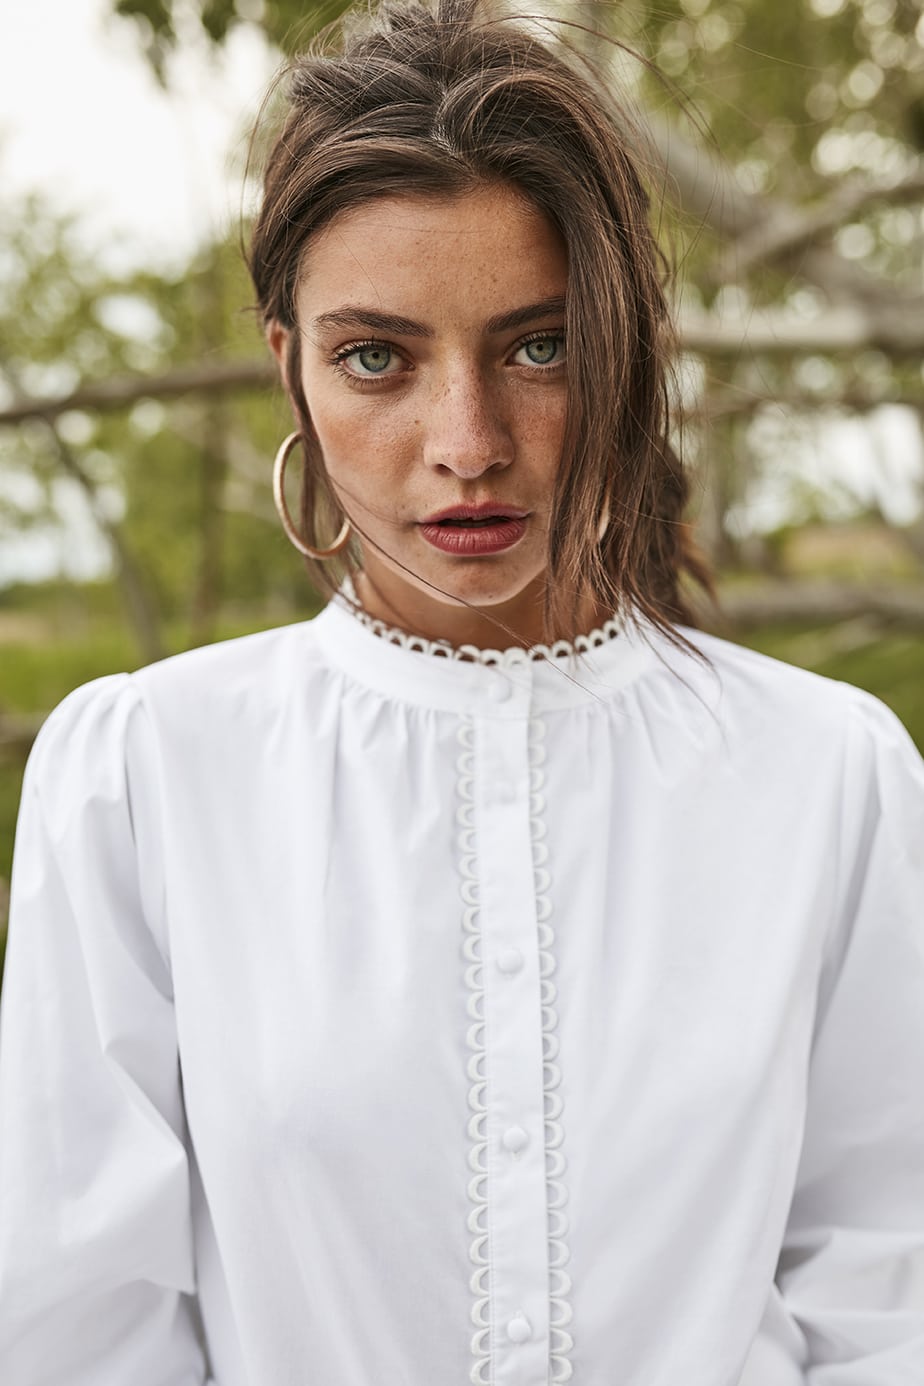 White shirt – a timeless classic in women’s closet